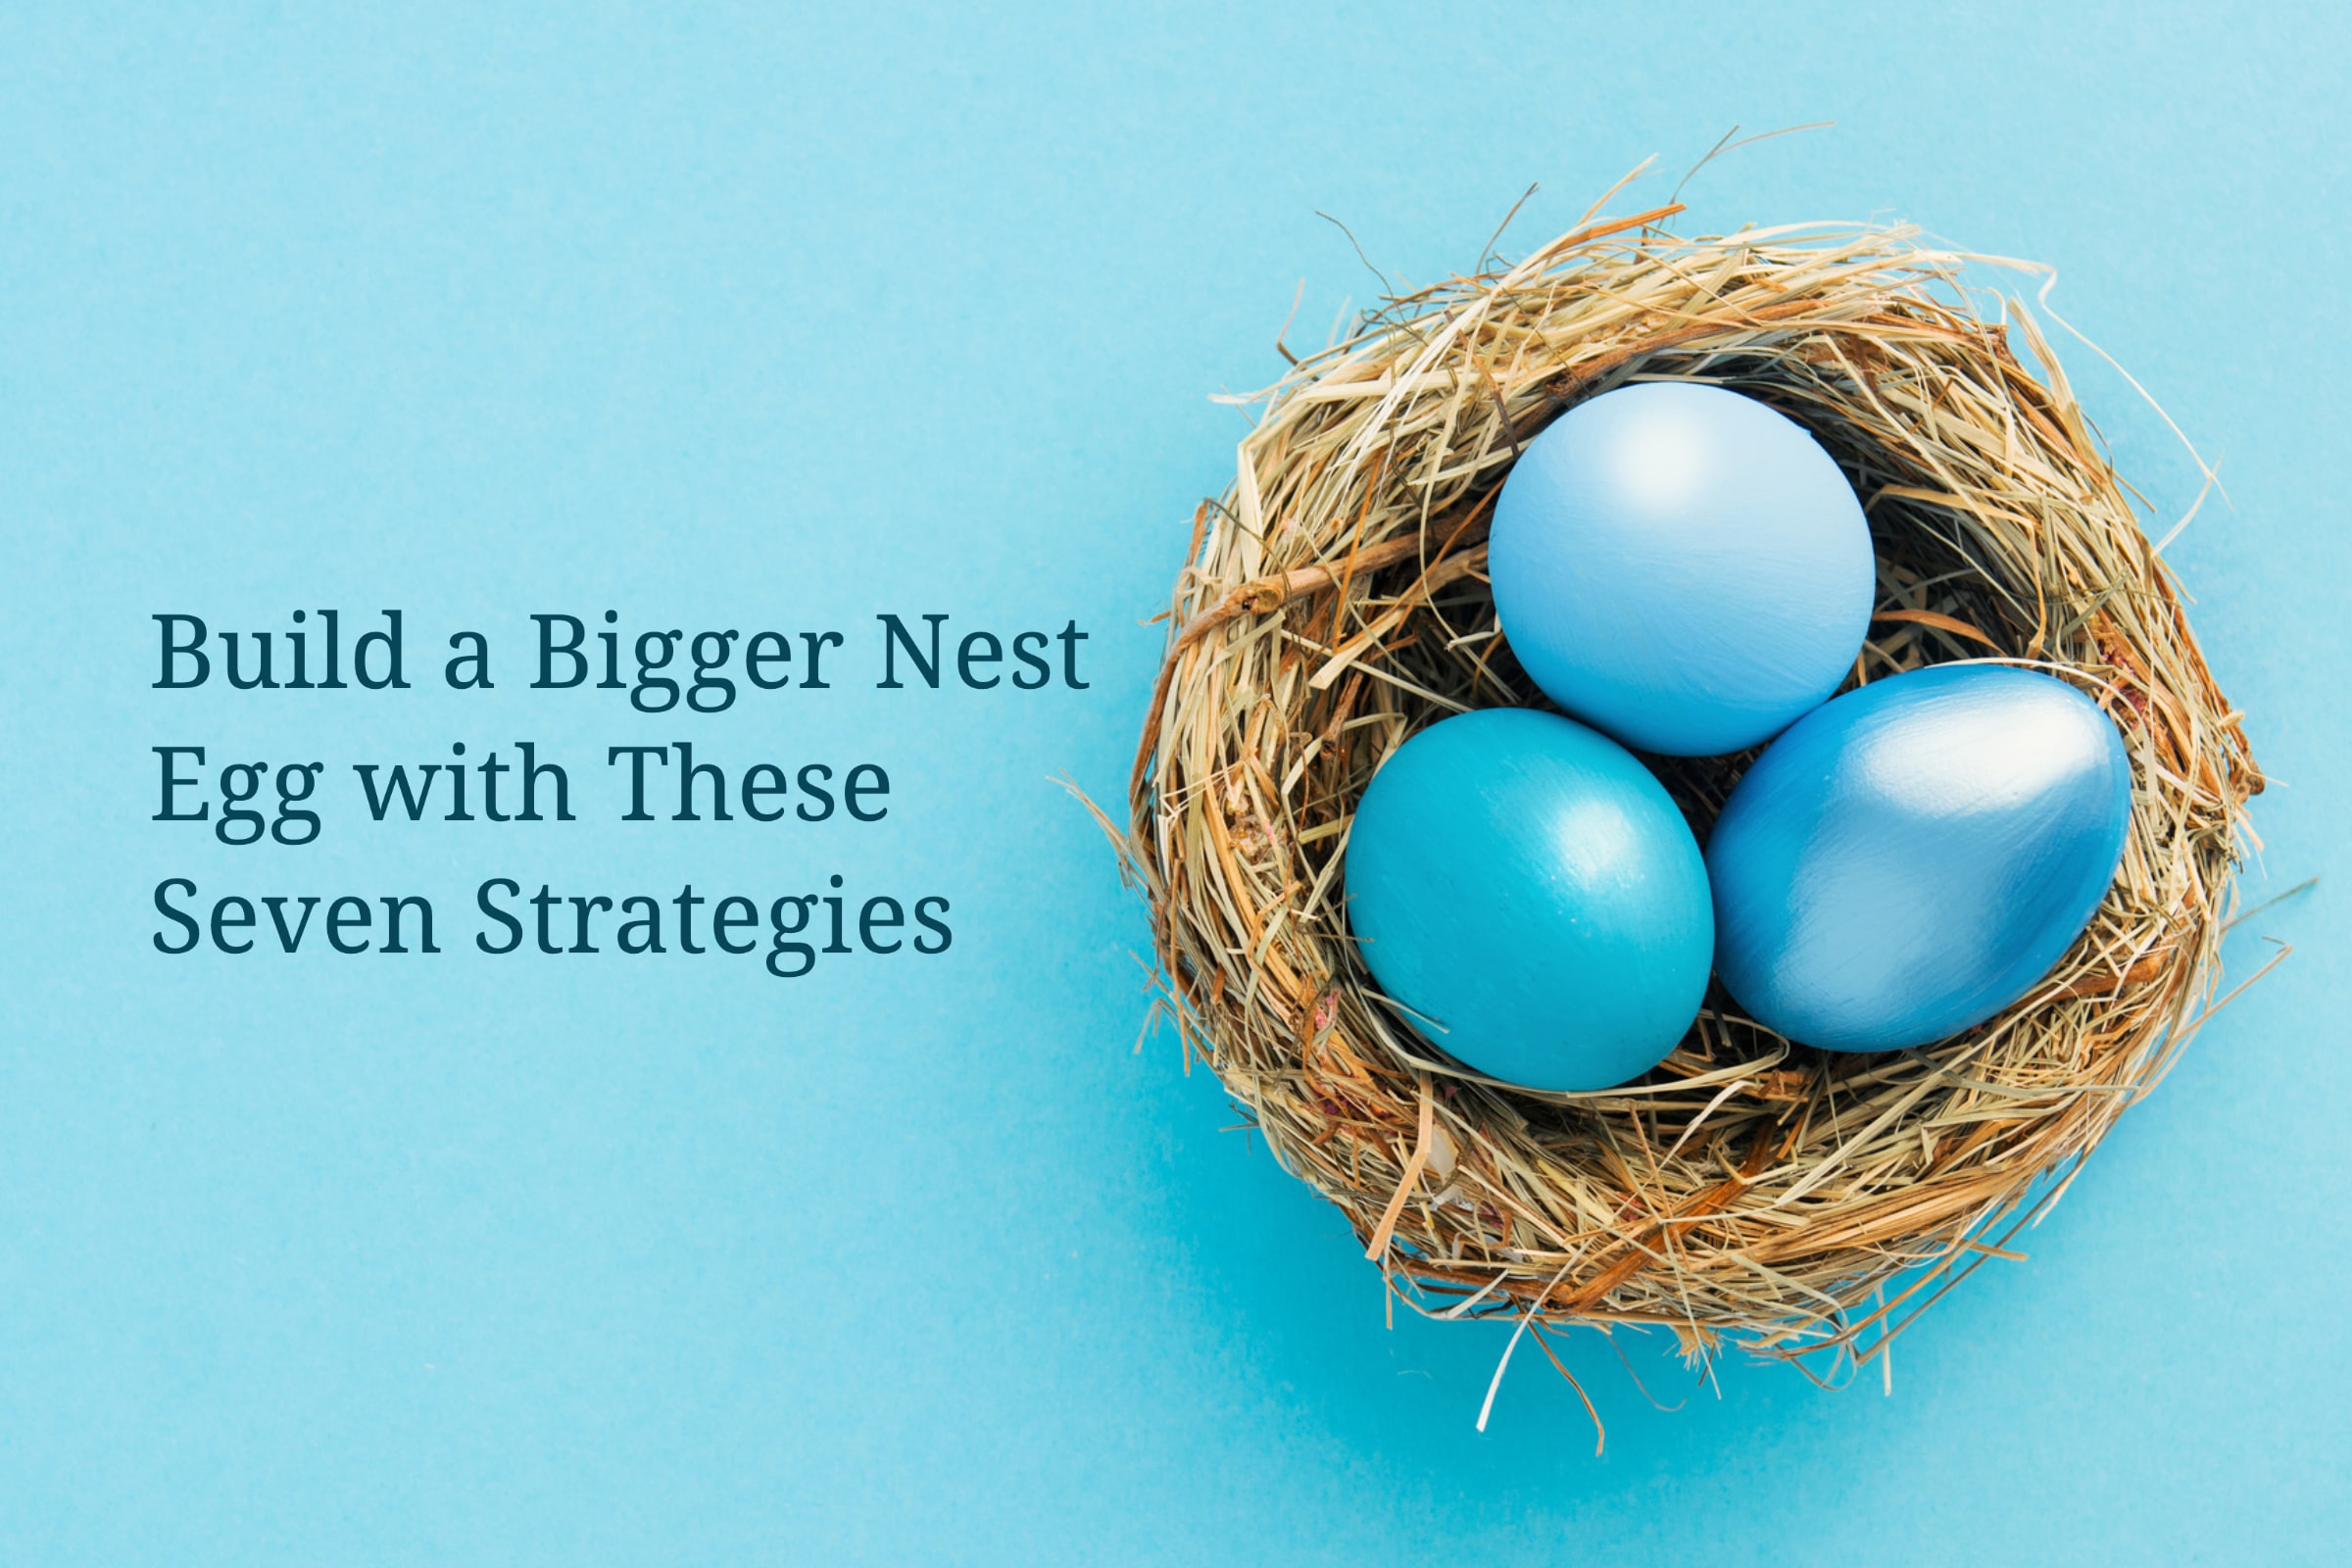 Build a bigger nest egg